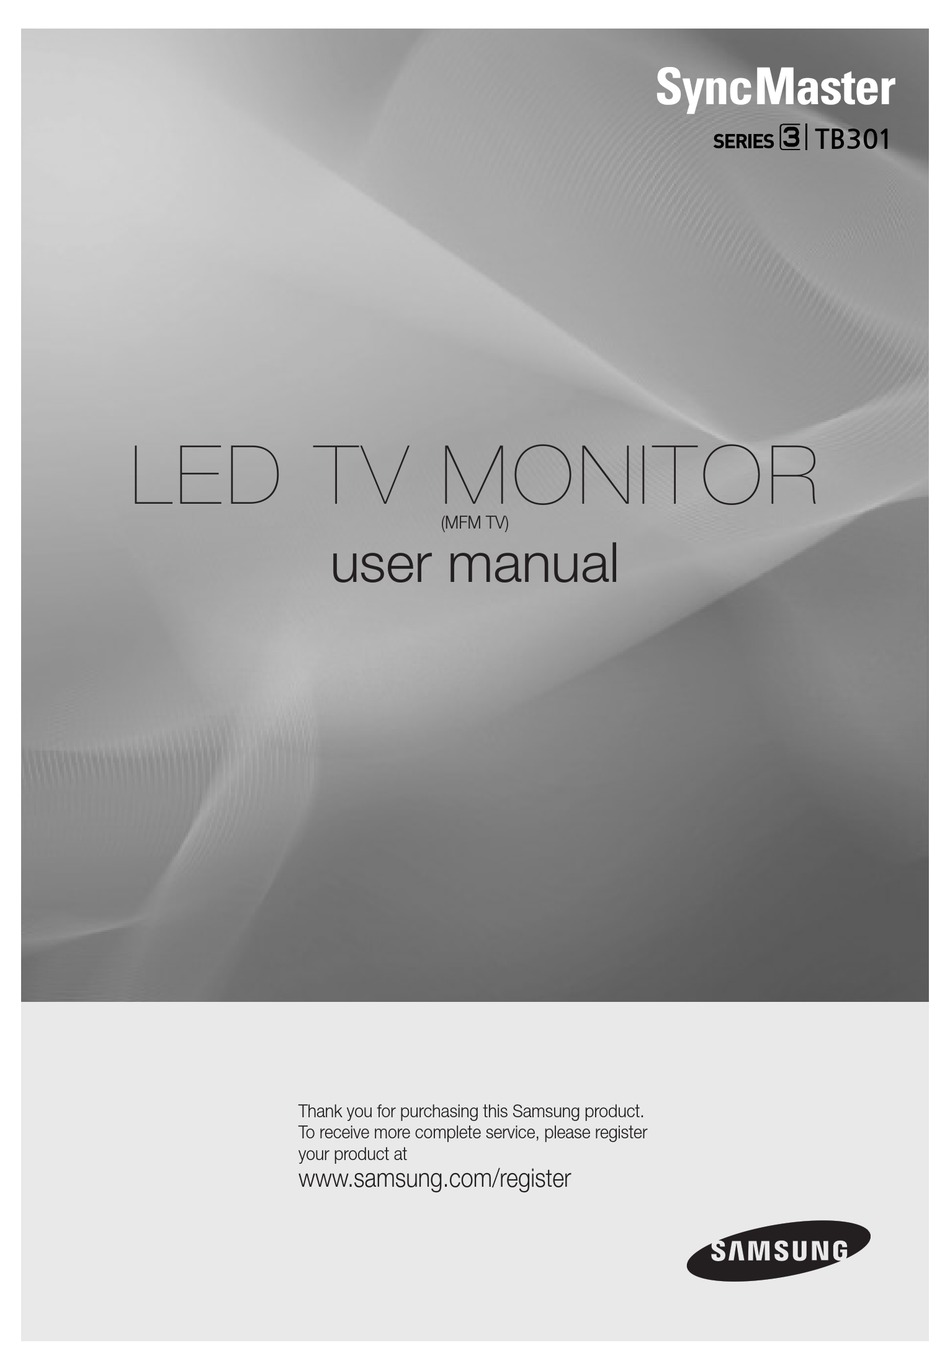 SAMSUNG SYNCMASTER 3 SERIES USER MANUAL Pdf Download | ManualsLib